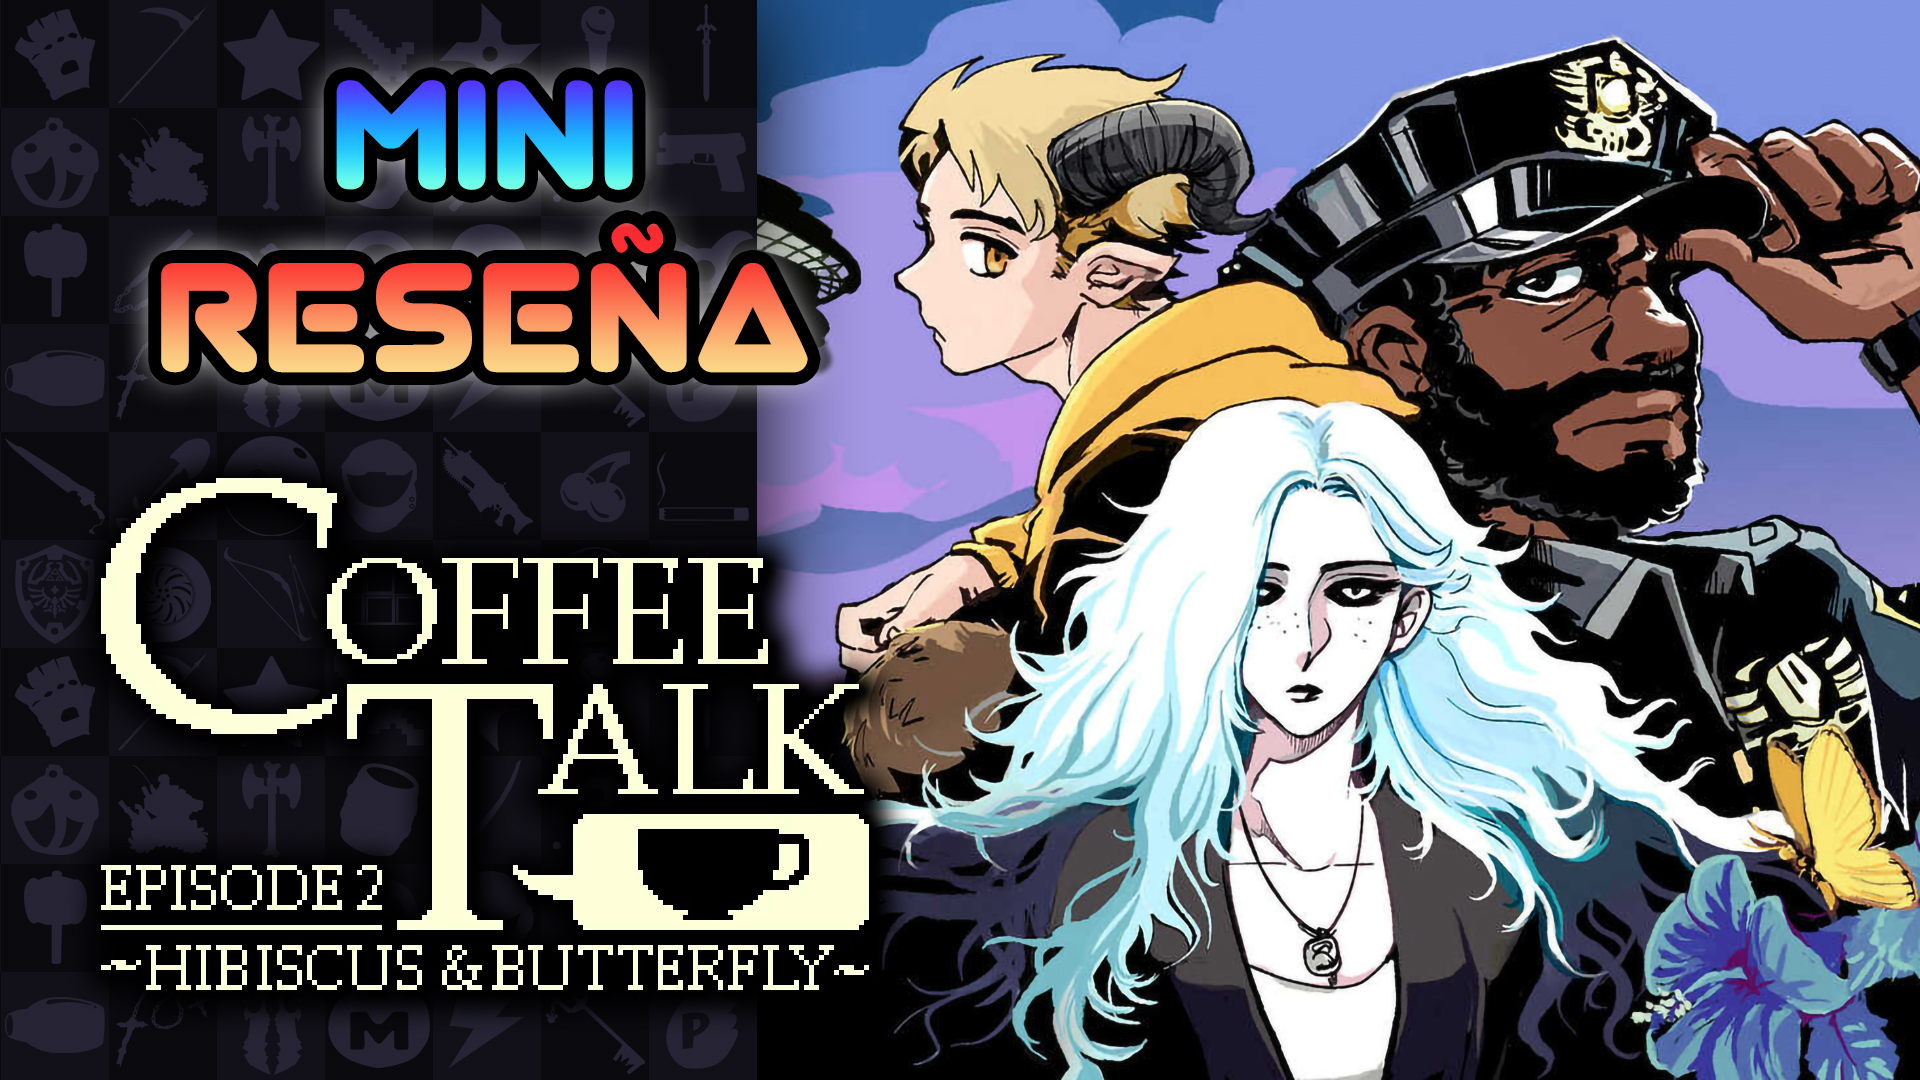 Mini Reseña Coffee Talk Episode 2: Hibiscus & Butterfly – Reencuentro con Amigos